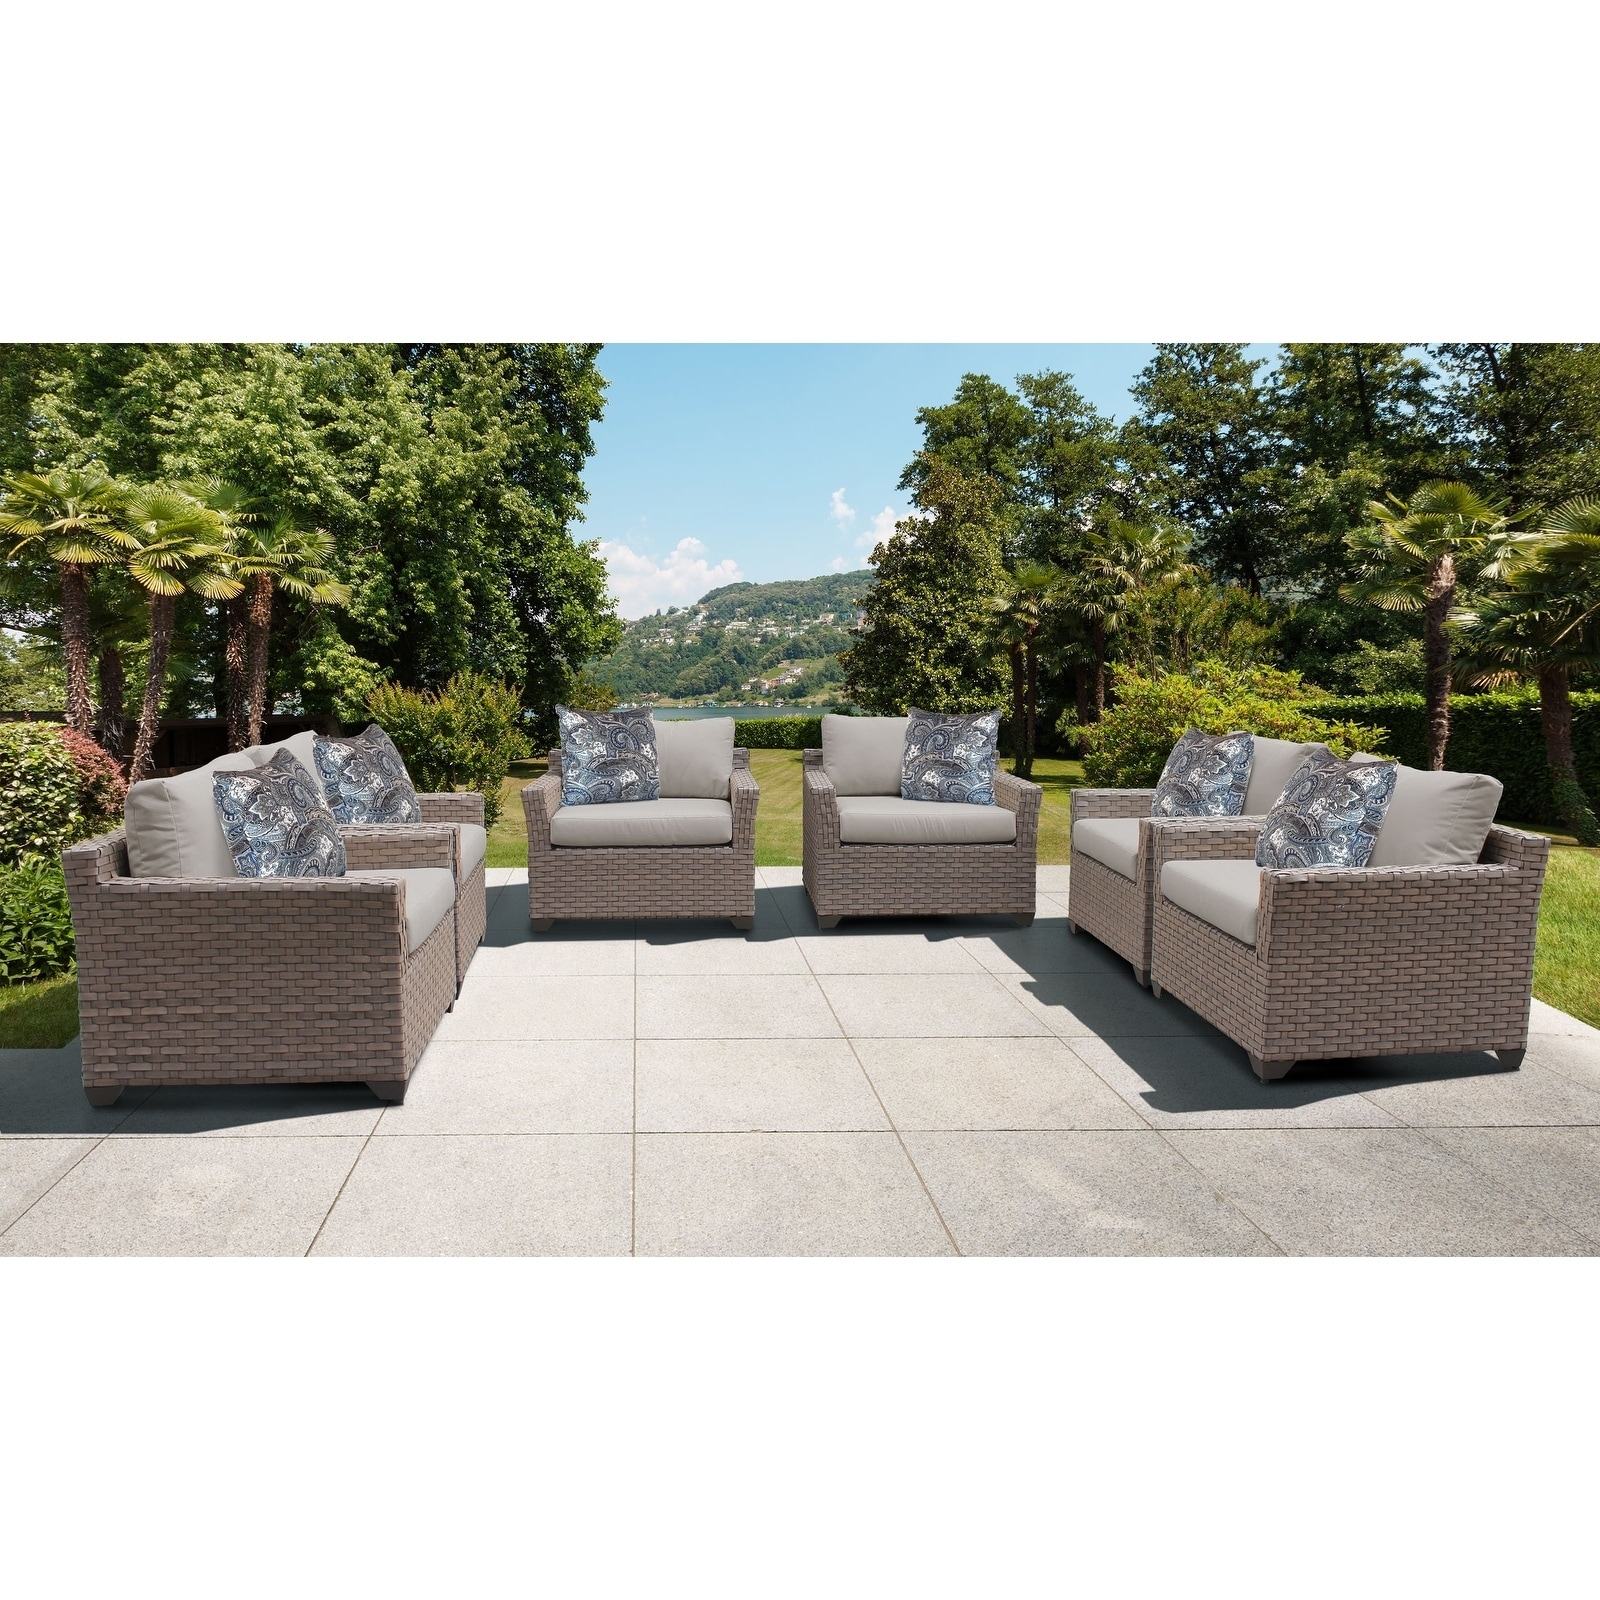 Monterey 6 Piece Outdoor Wicker Patio Furniture Set 06d